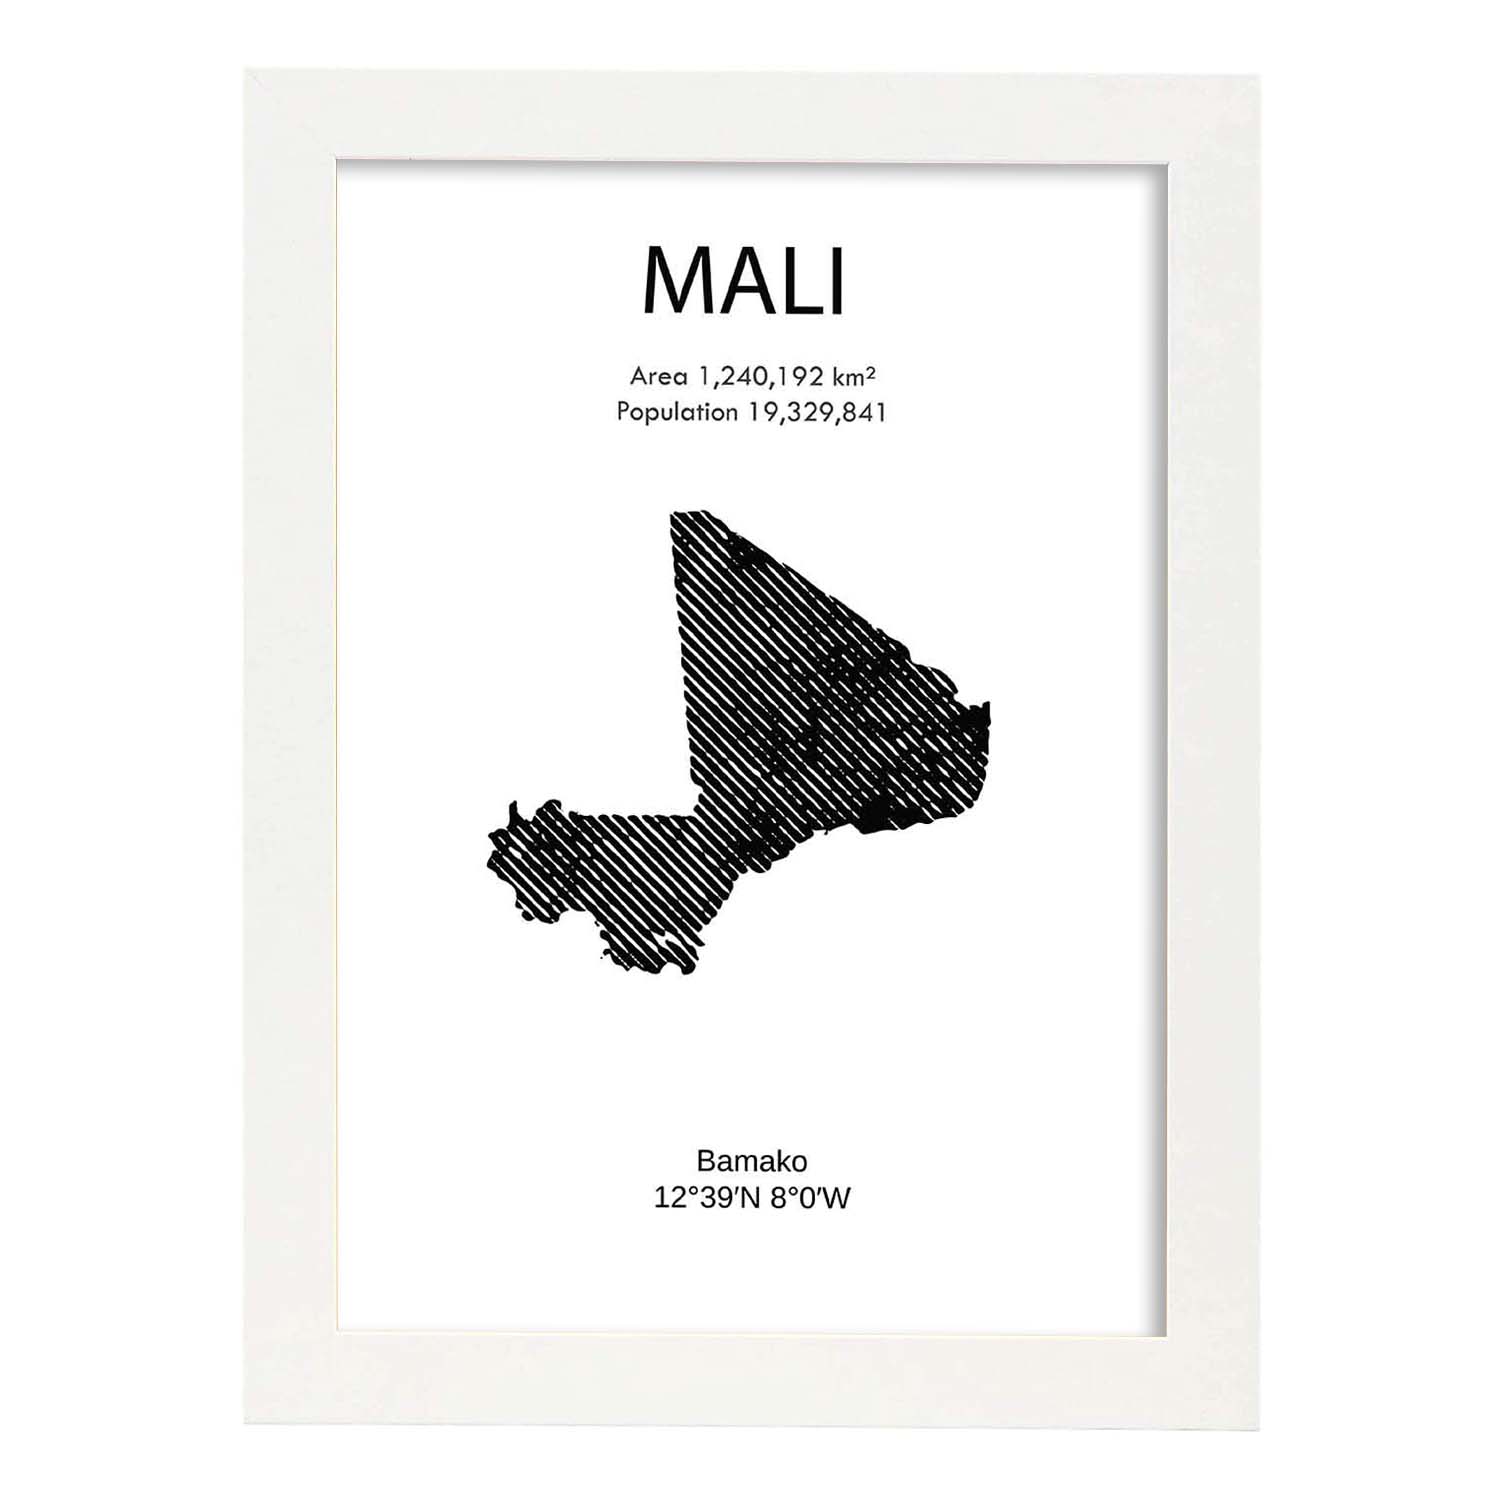 Poster de Mali. Láminas de paises y continentes del mundo.-Artwork-Nacnic-A3-Marco Blanco-Nacnic Estudio SL